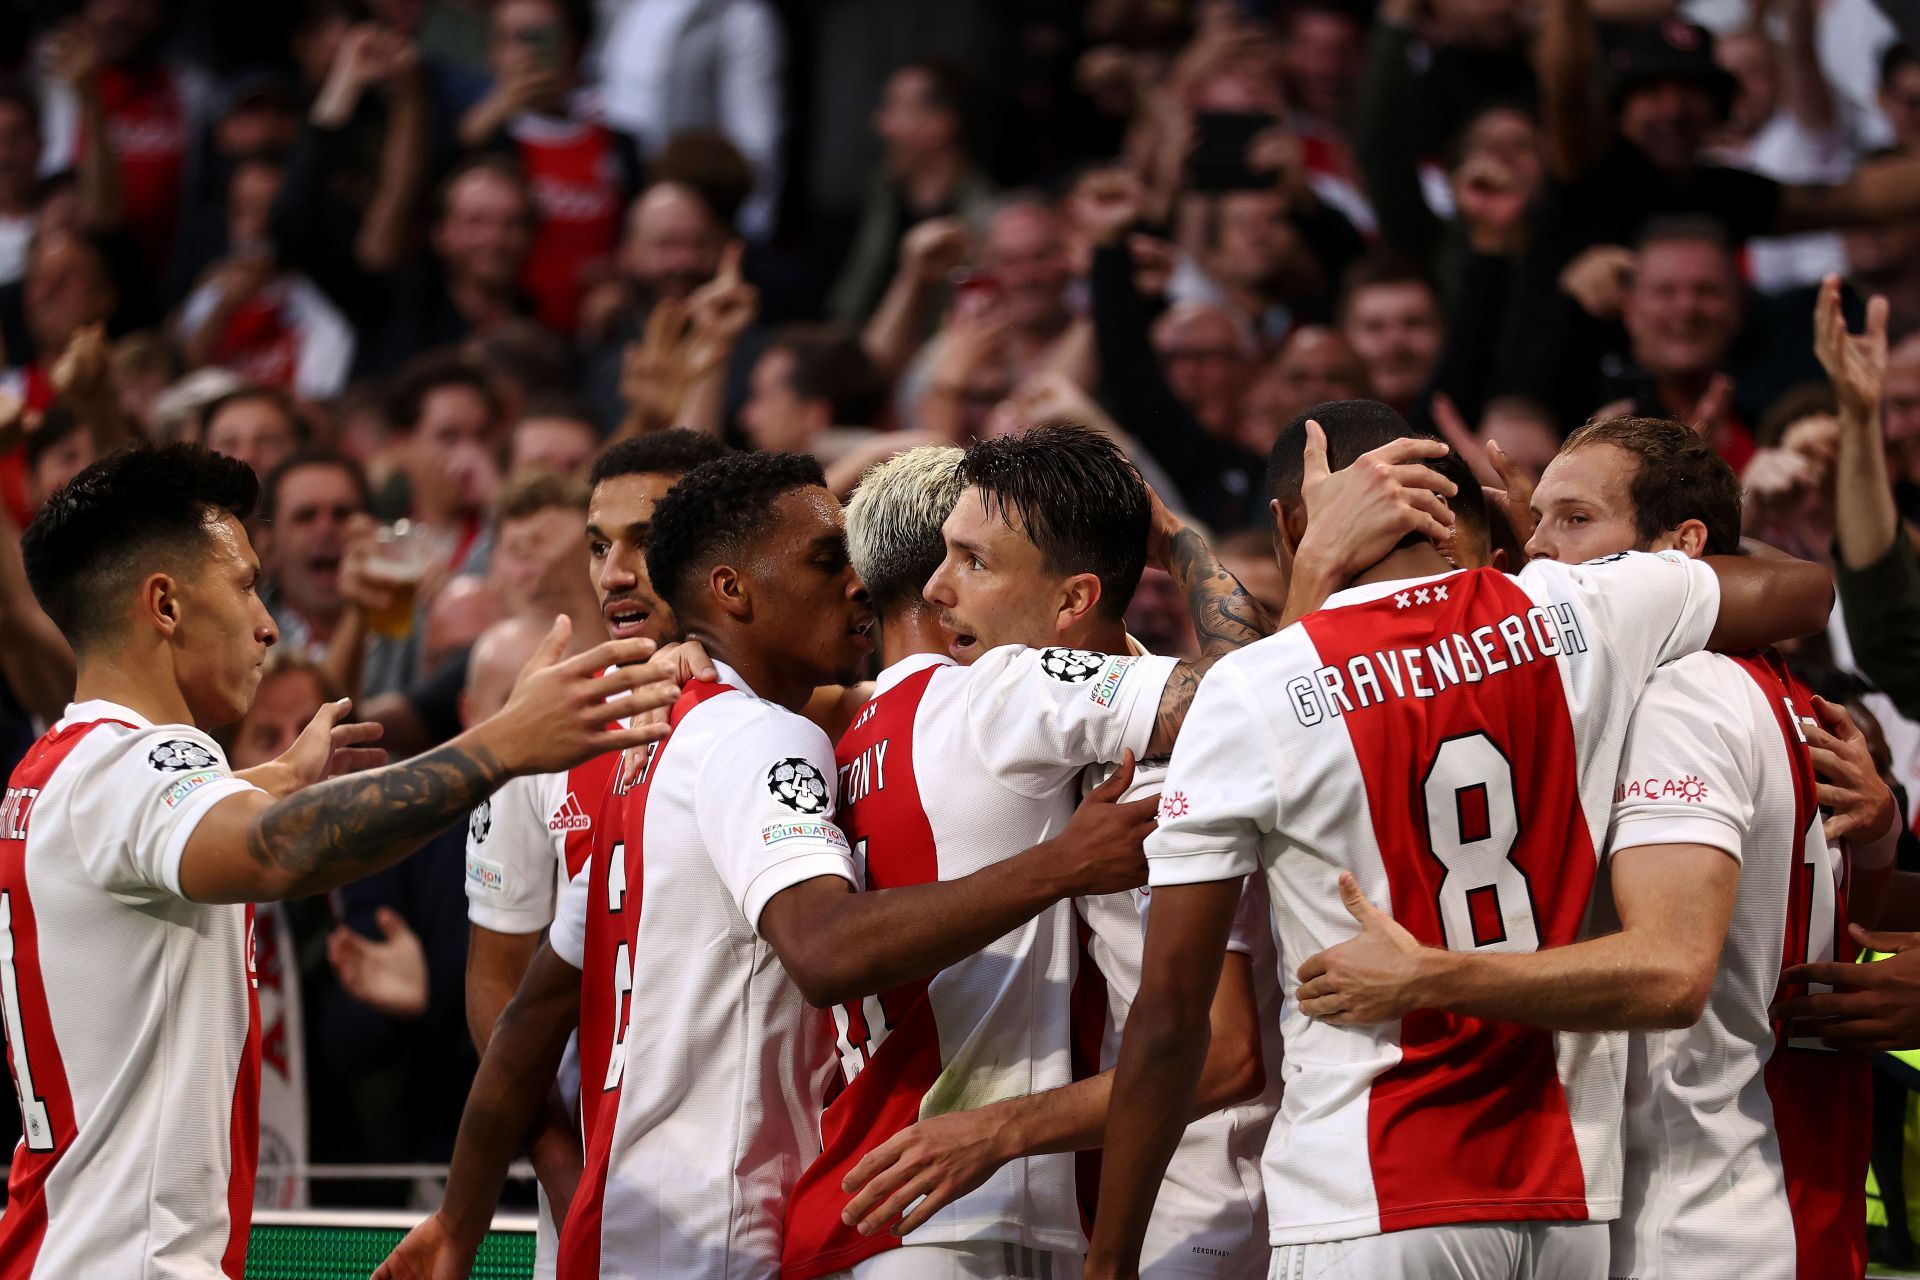 Ajax are onto something special this season.